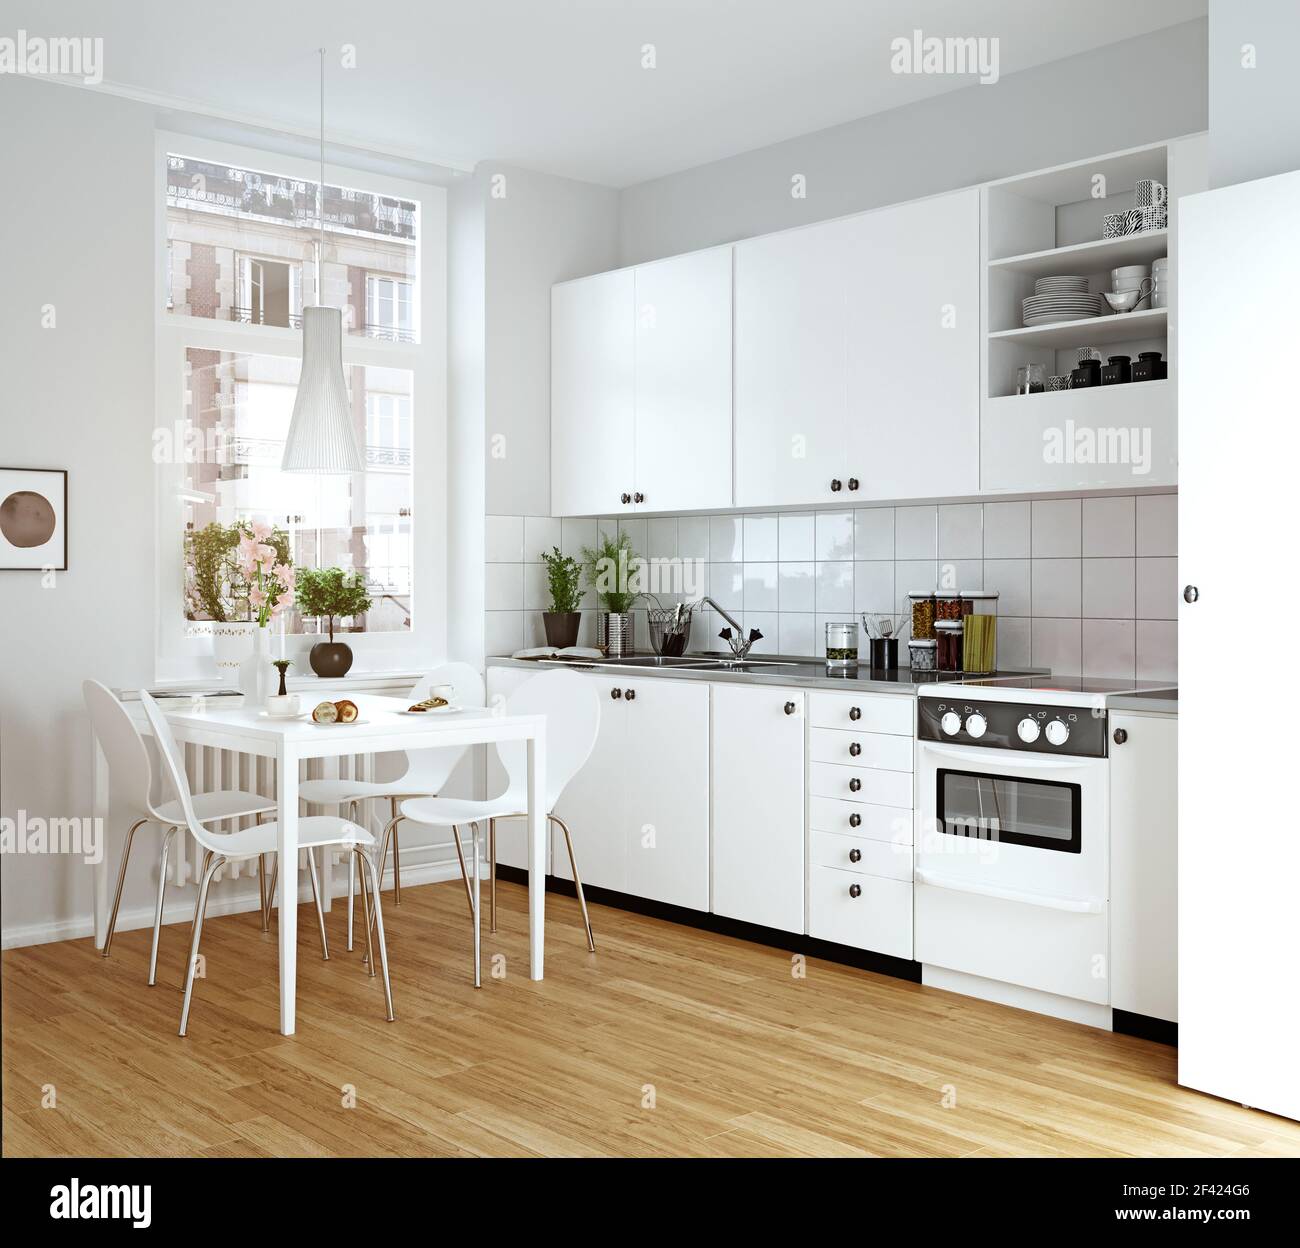 https://c8.alamy.com/comp/2F424G6/modern-cozy-kitchen-interior-3d-rendering-design-concept-2F424G6.jpg